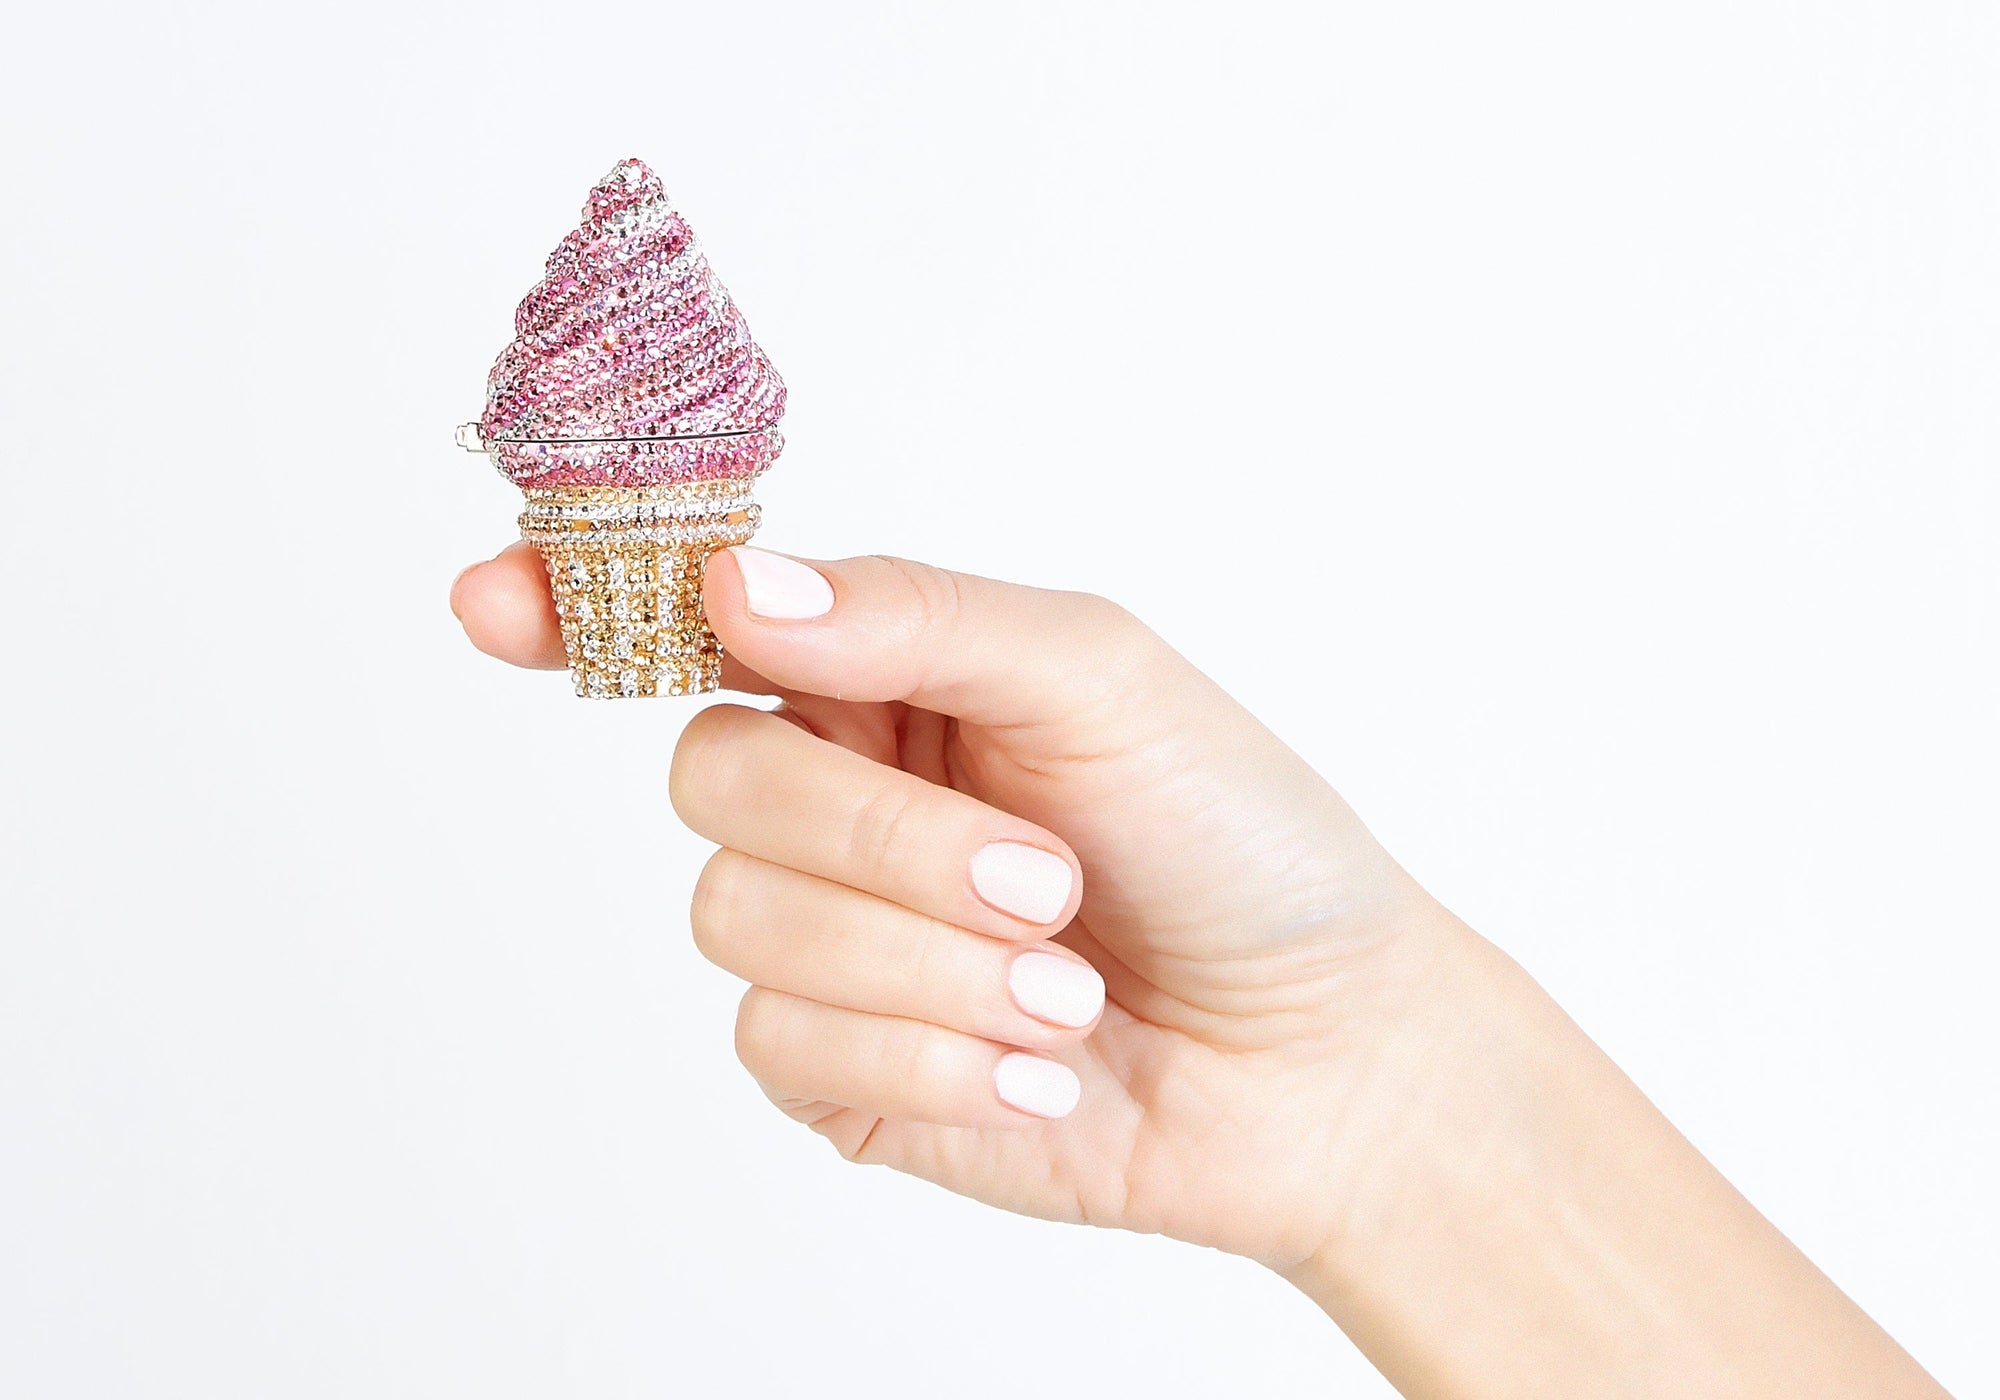 Ice Cream Cone Pillbox Strawberry Twist